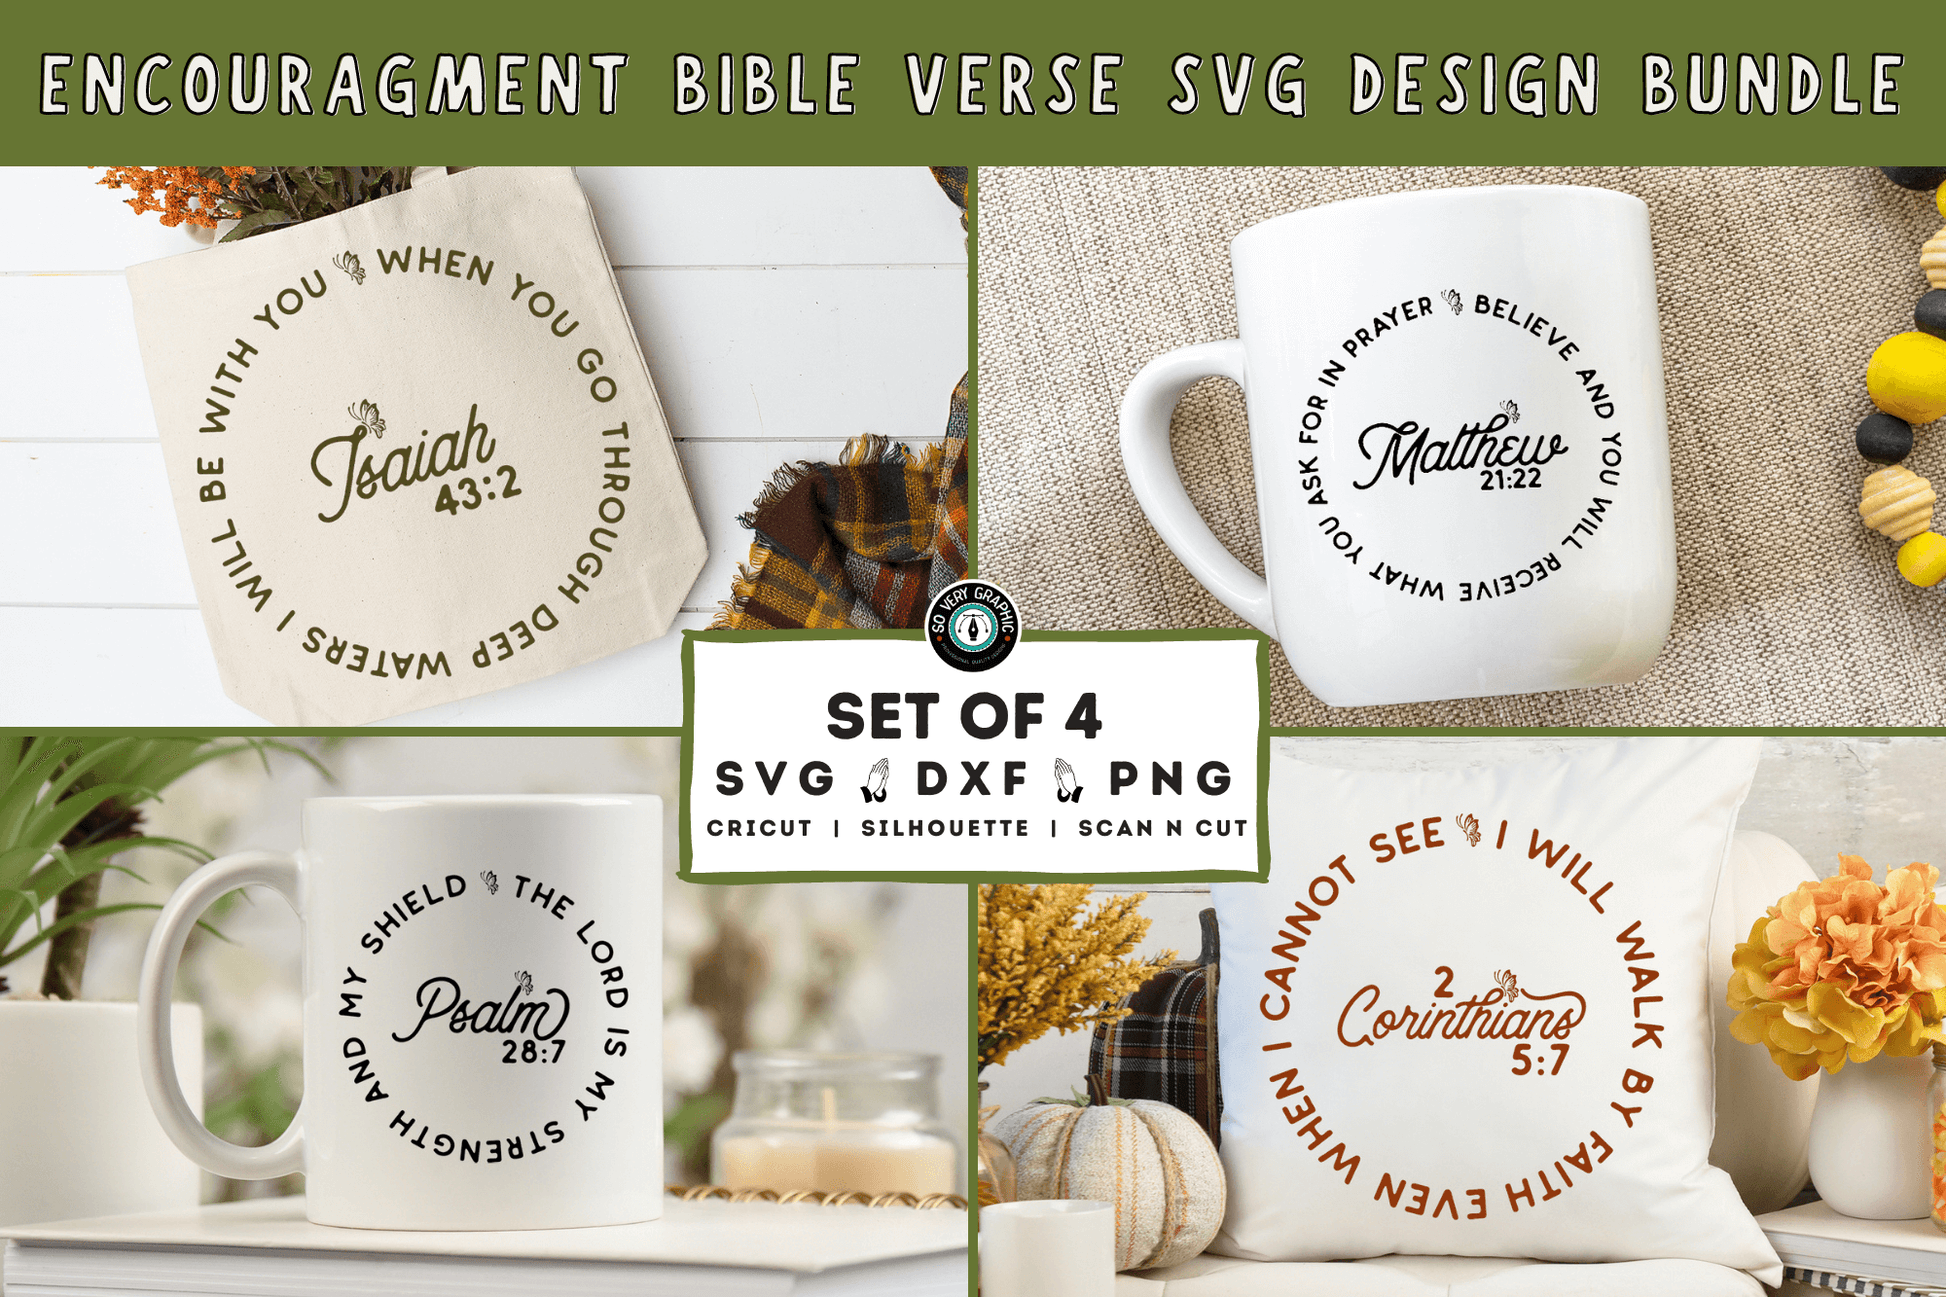 Encouragement Bible Verse Round SVG Design Bundle, designed for Cricut crafters